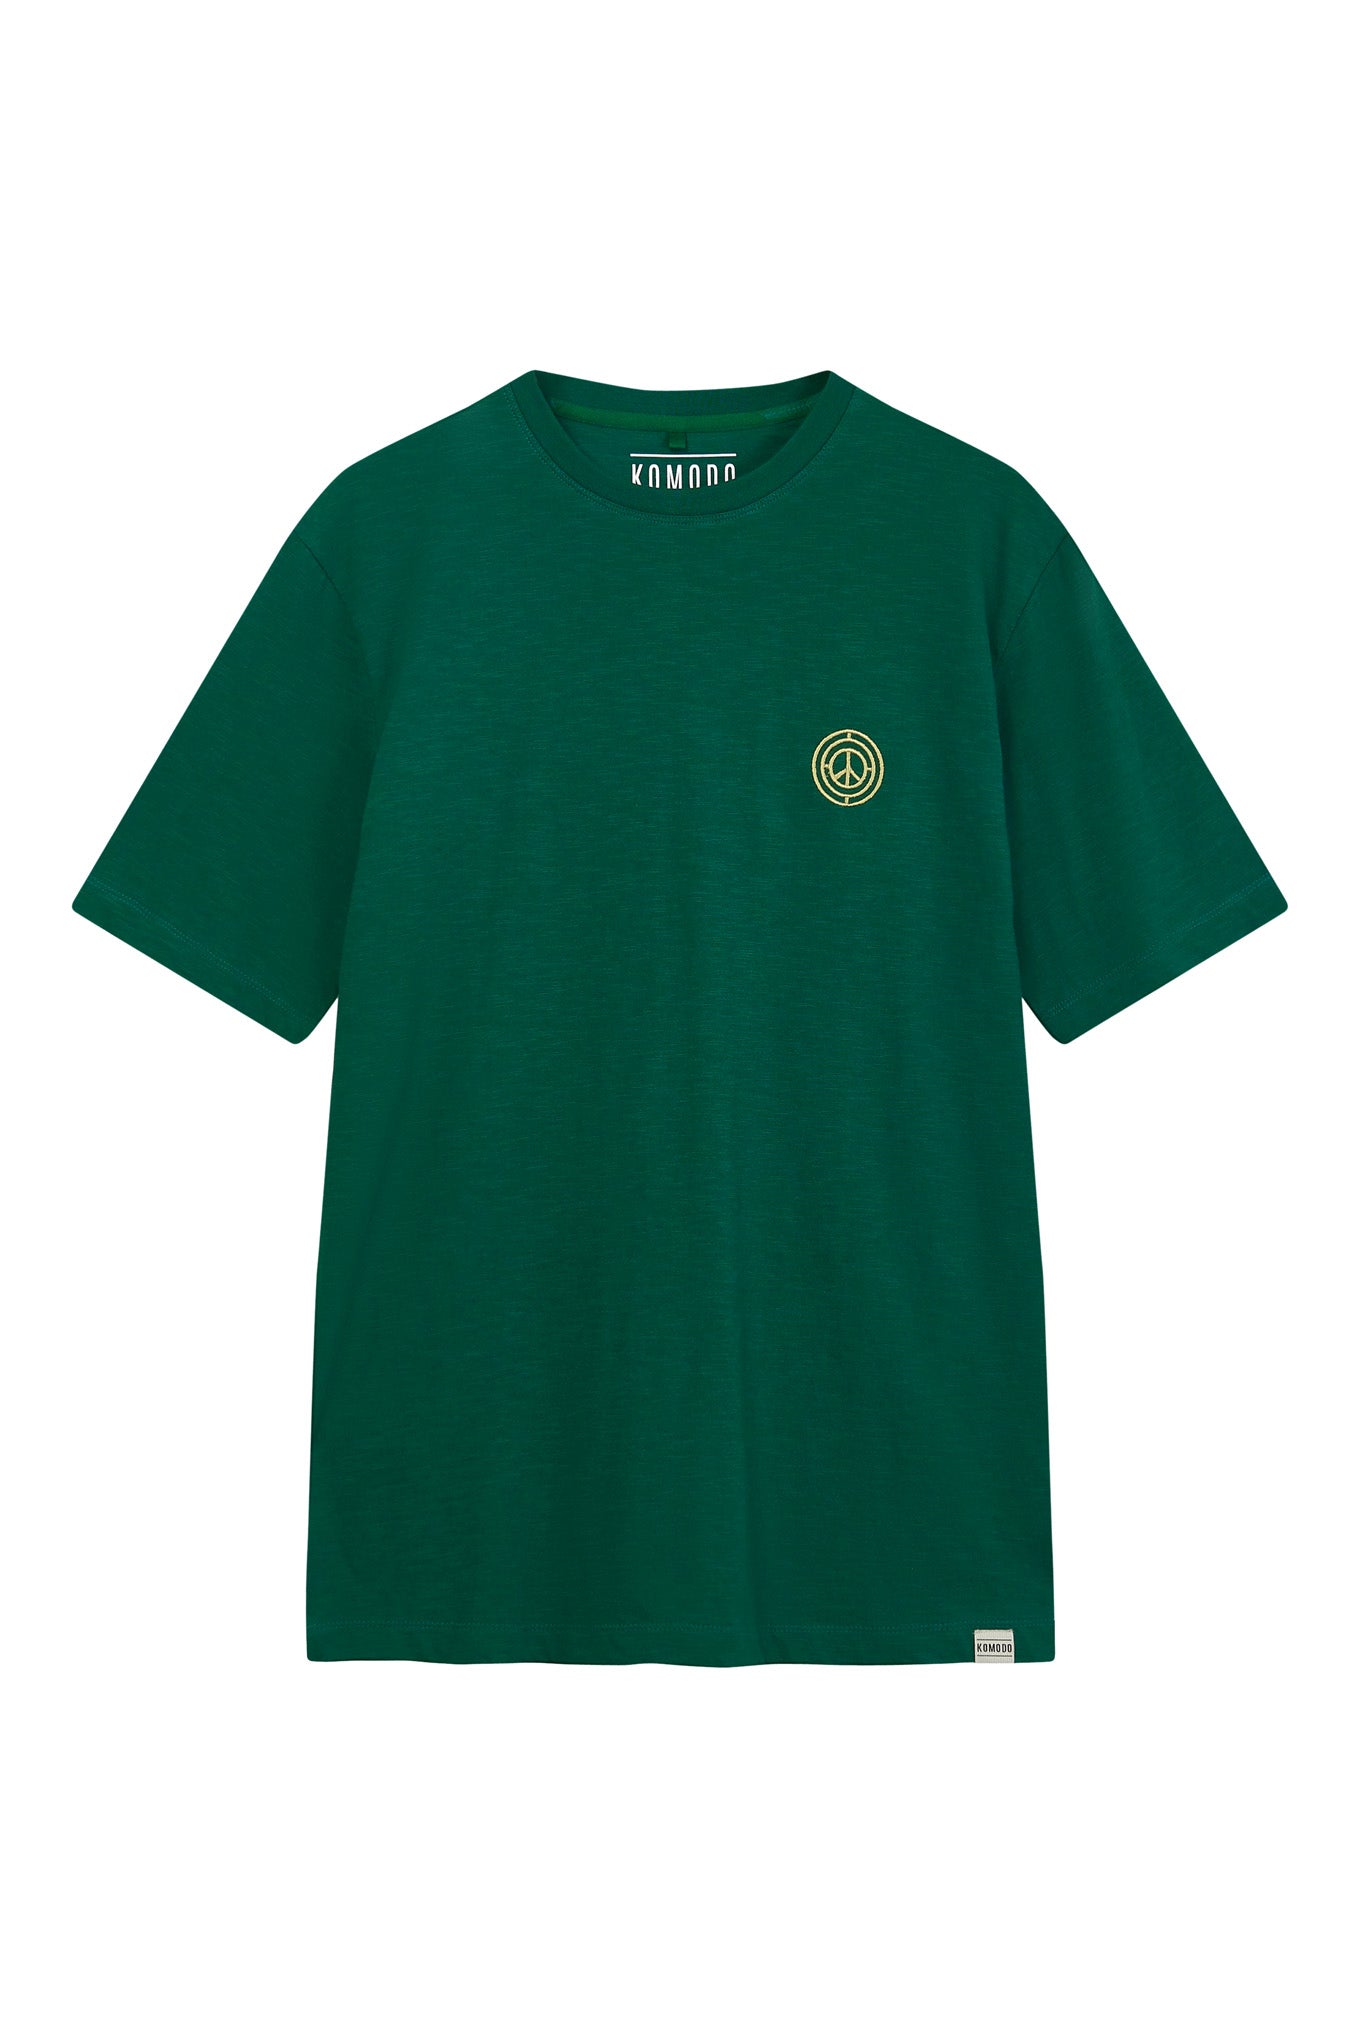 T-shirt vert foncé KIN en coton biologique de Komodo